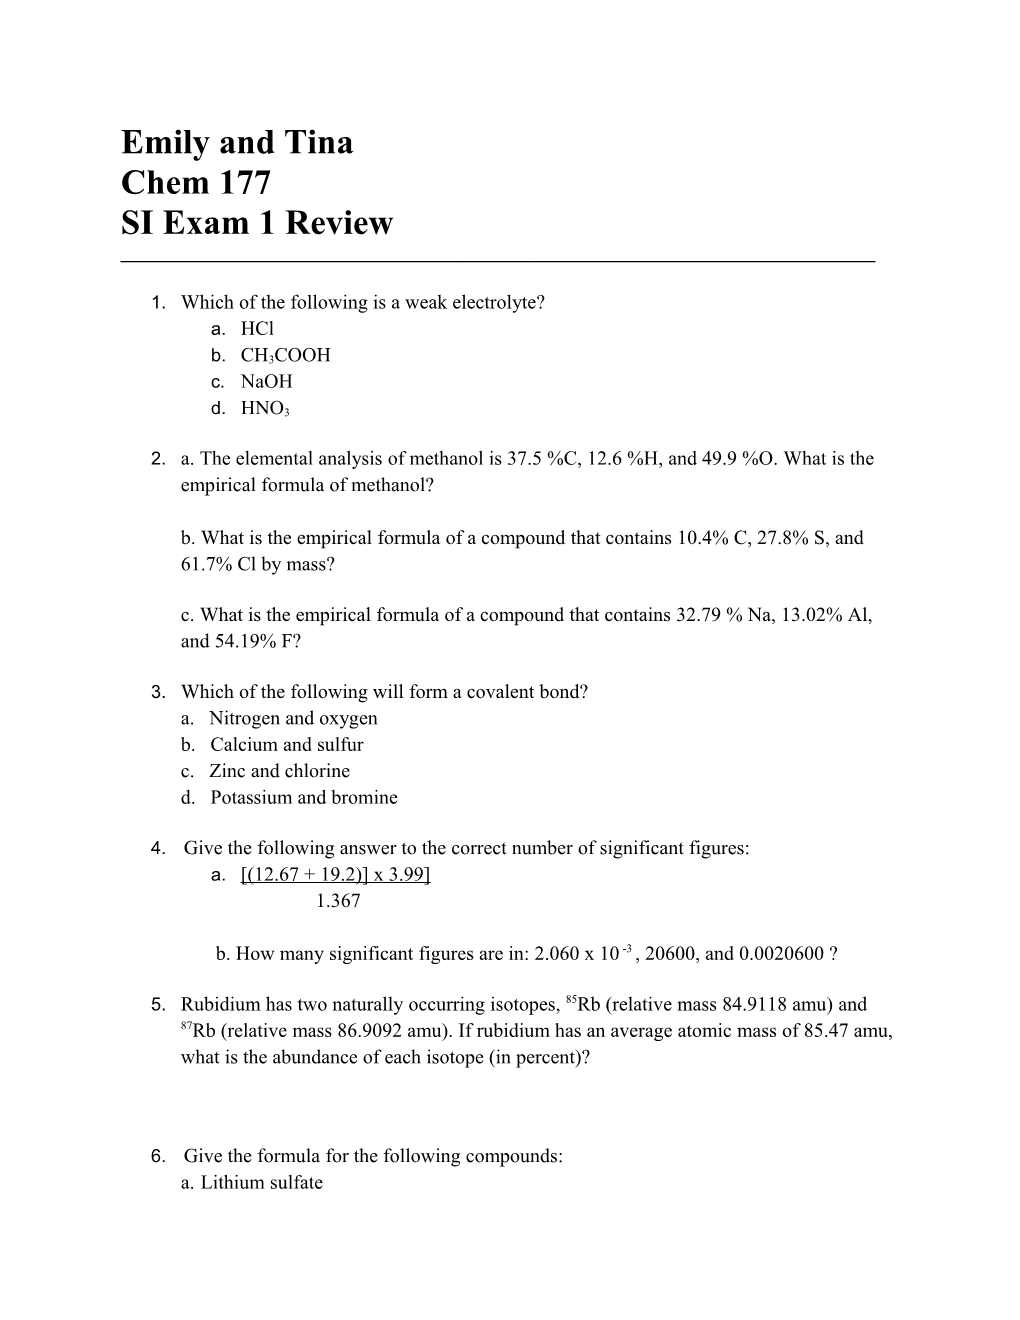 Chem 177 SI Exam 1 Review